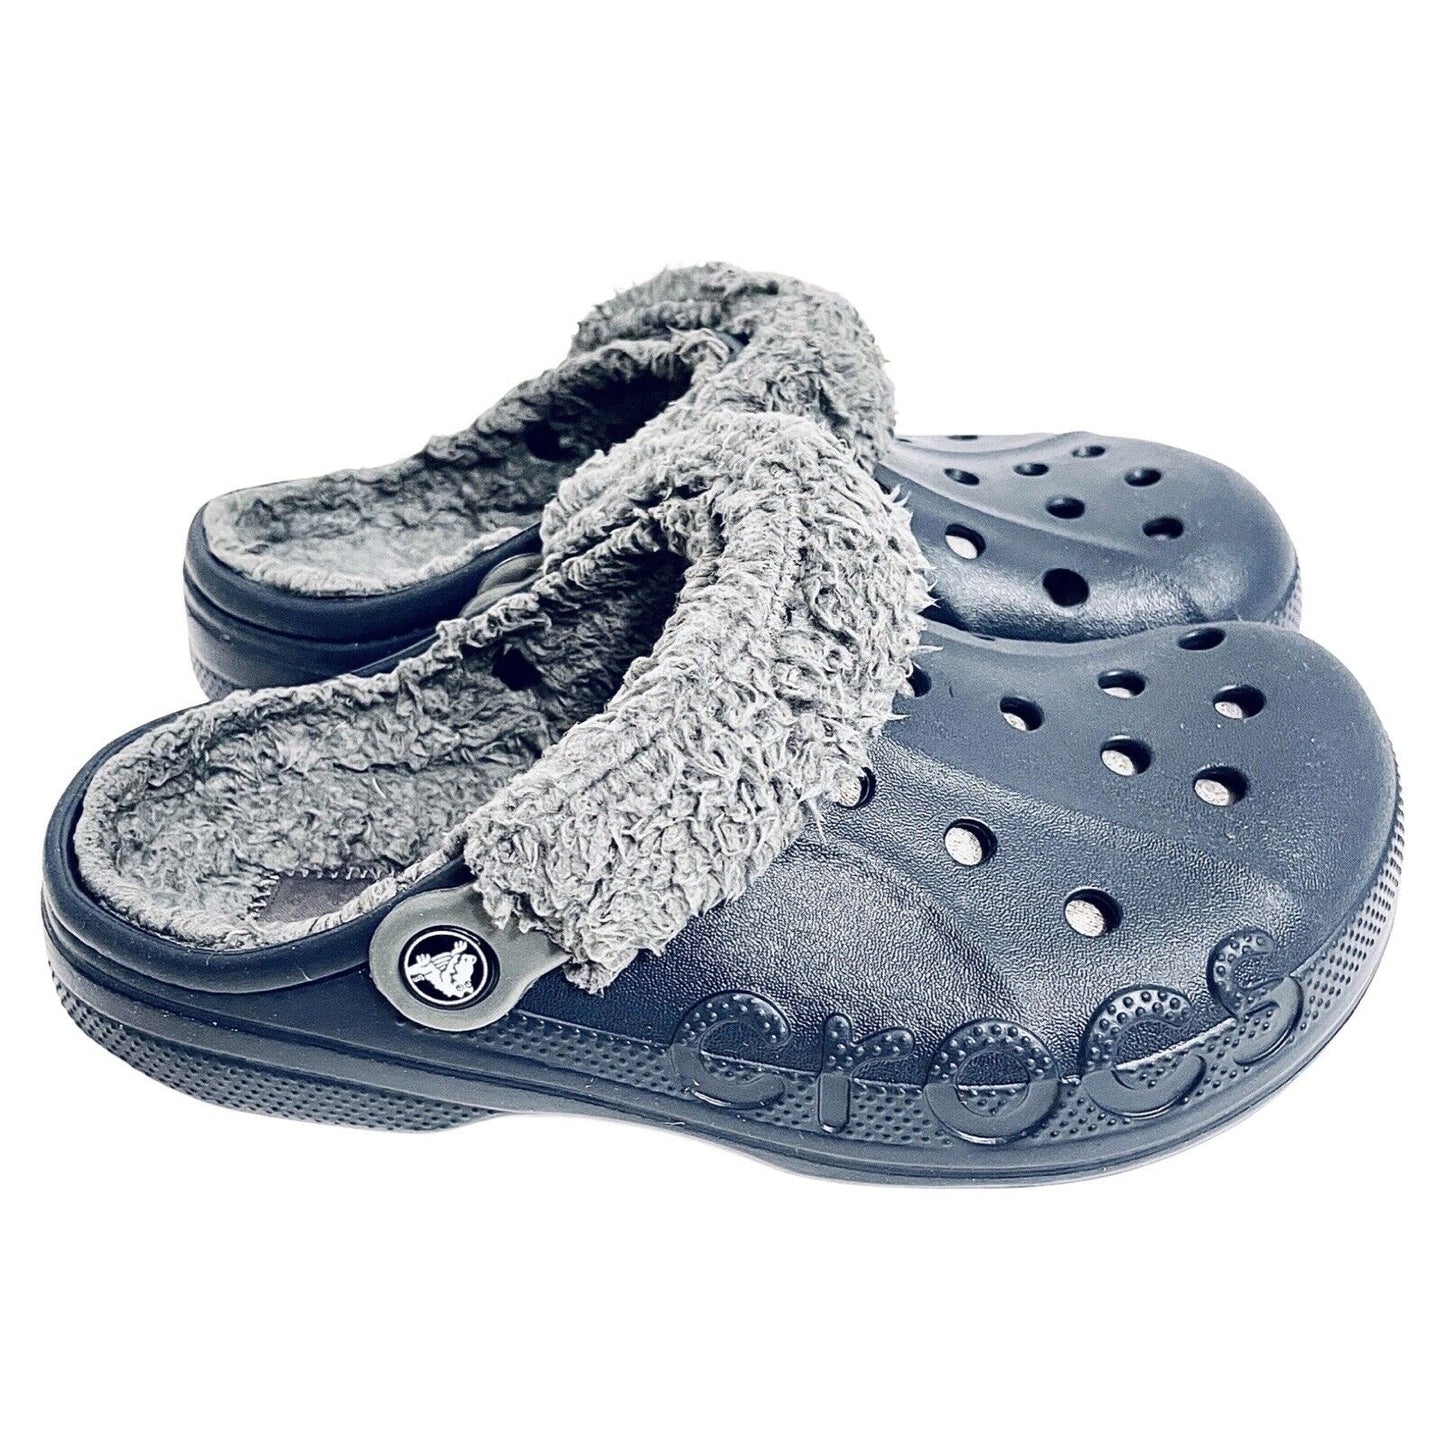 Crocs Baya Lined Fuzz Strap Clogs Size W 8 M 6 Fuzzy Slippers Shoes